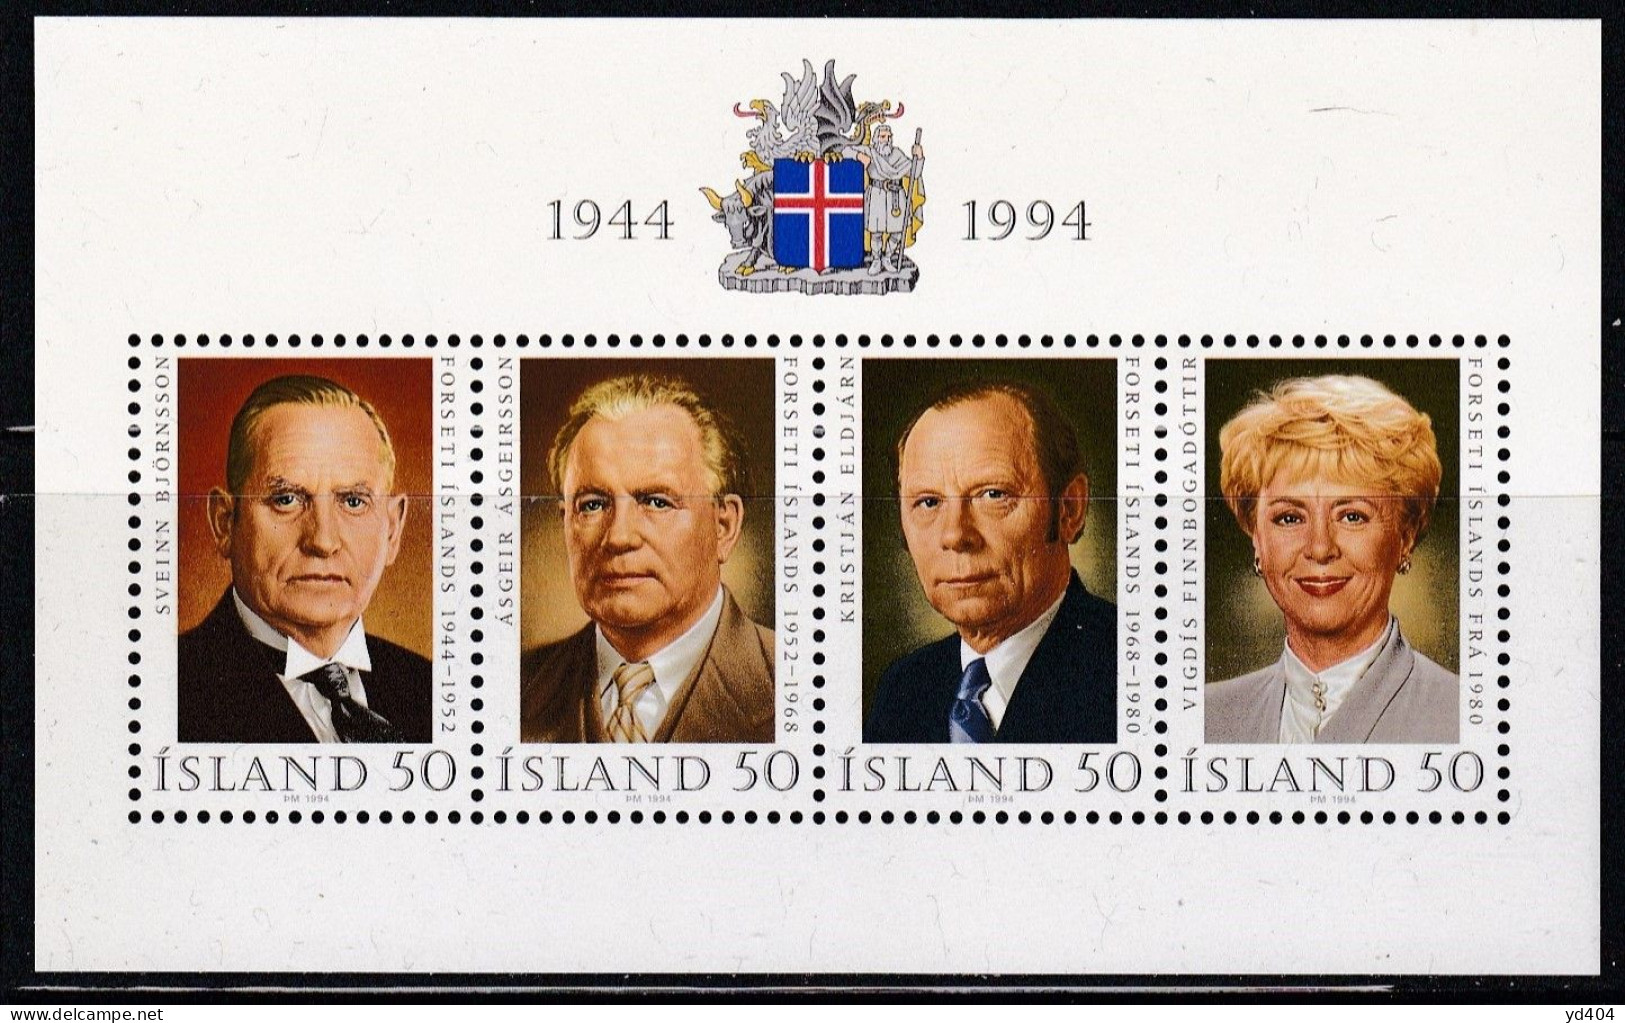 IS484 – ISLANDE – ICELAND – 1994 – 50th ANNIVERSARY OF REPUBLIC – SG # MS 829 MNH 11,50 € - Blocks & Sheetlets